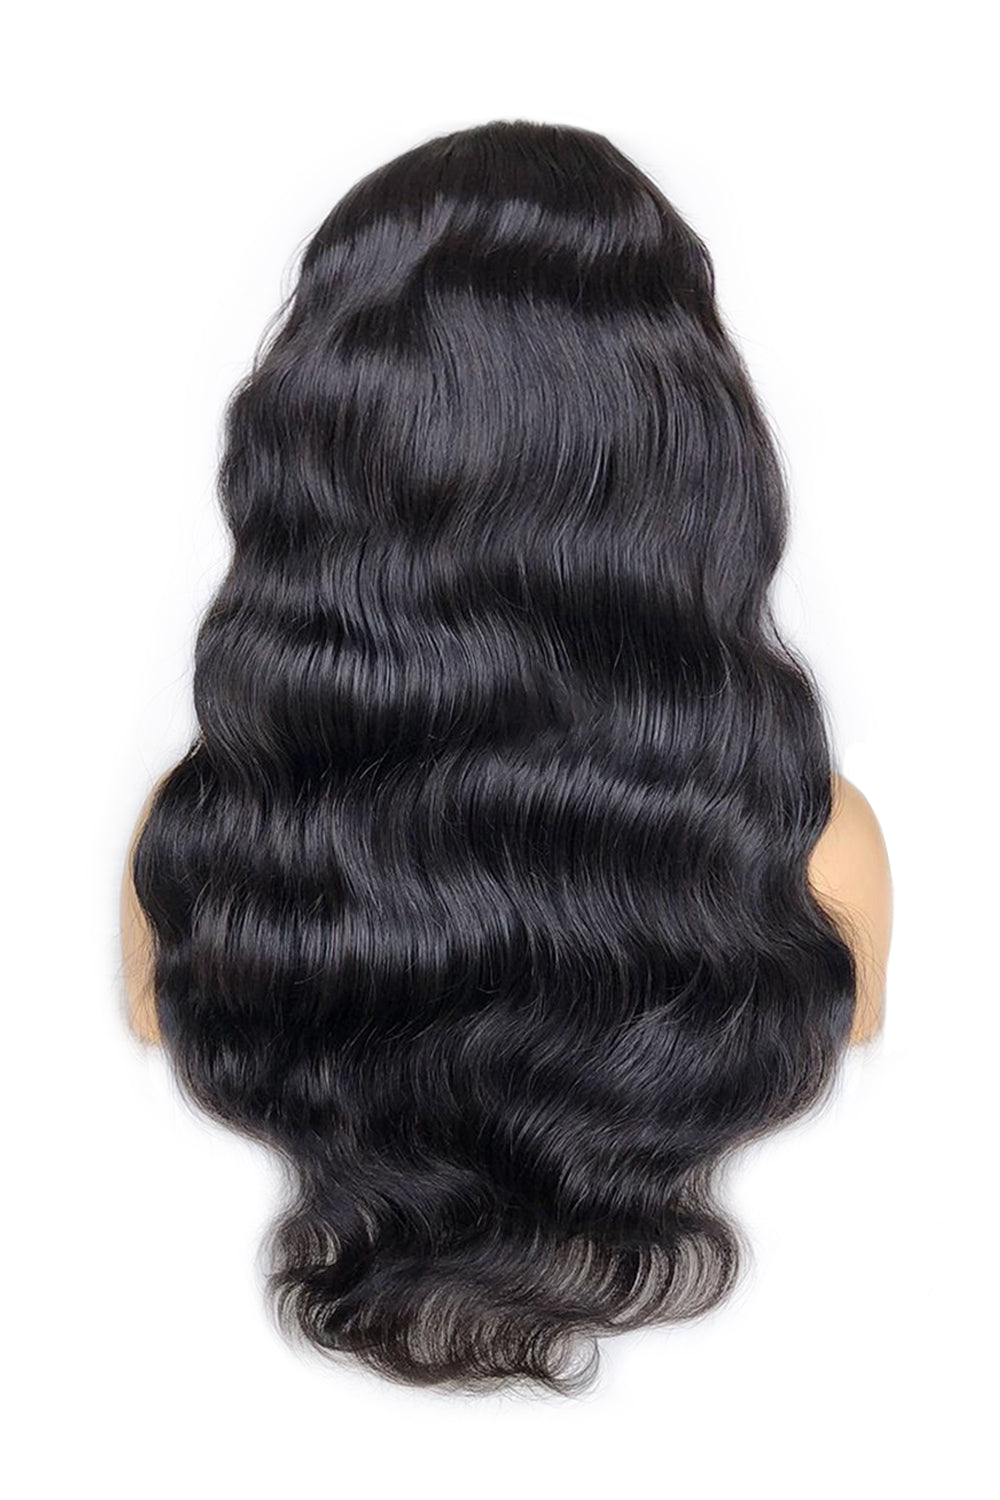 13x4 Full Frontal Lace Wigs Body Wave 250% Density Long Black Hair